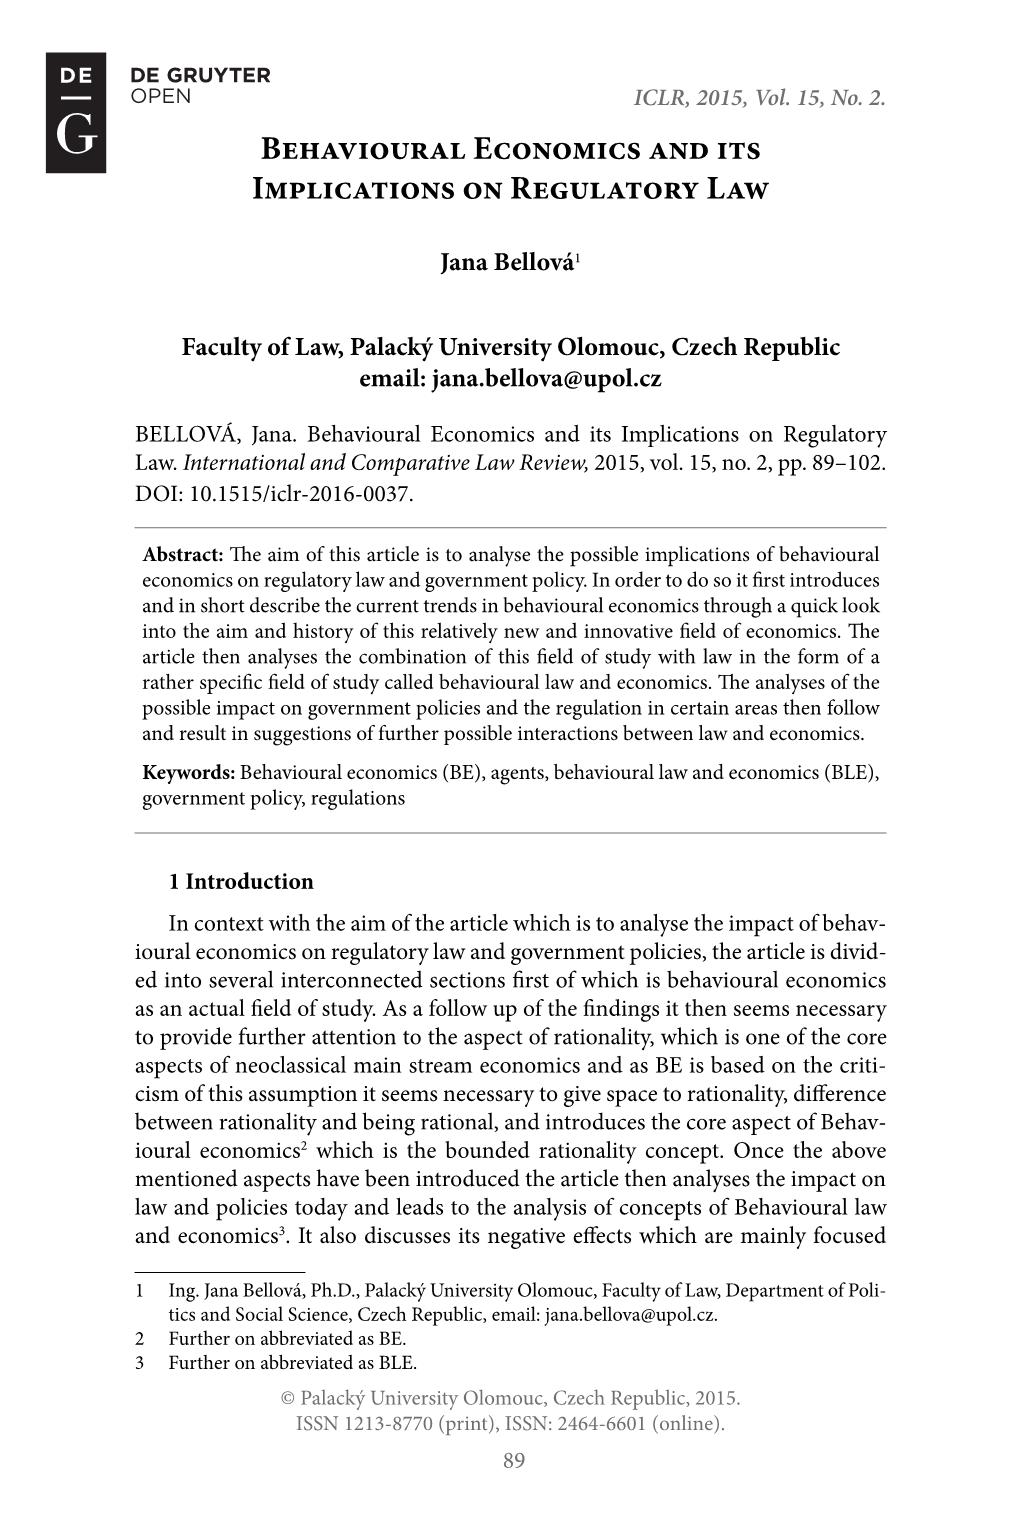 Behavioural Economics and Its Implications on Regulatory Law